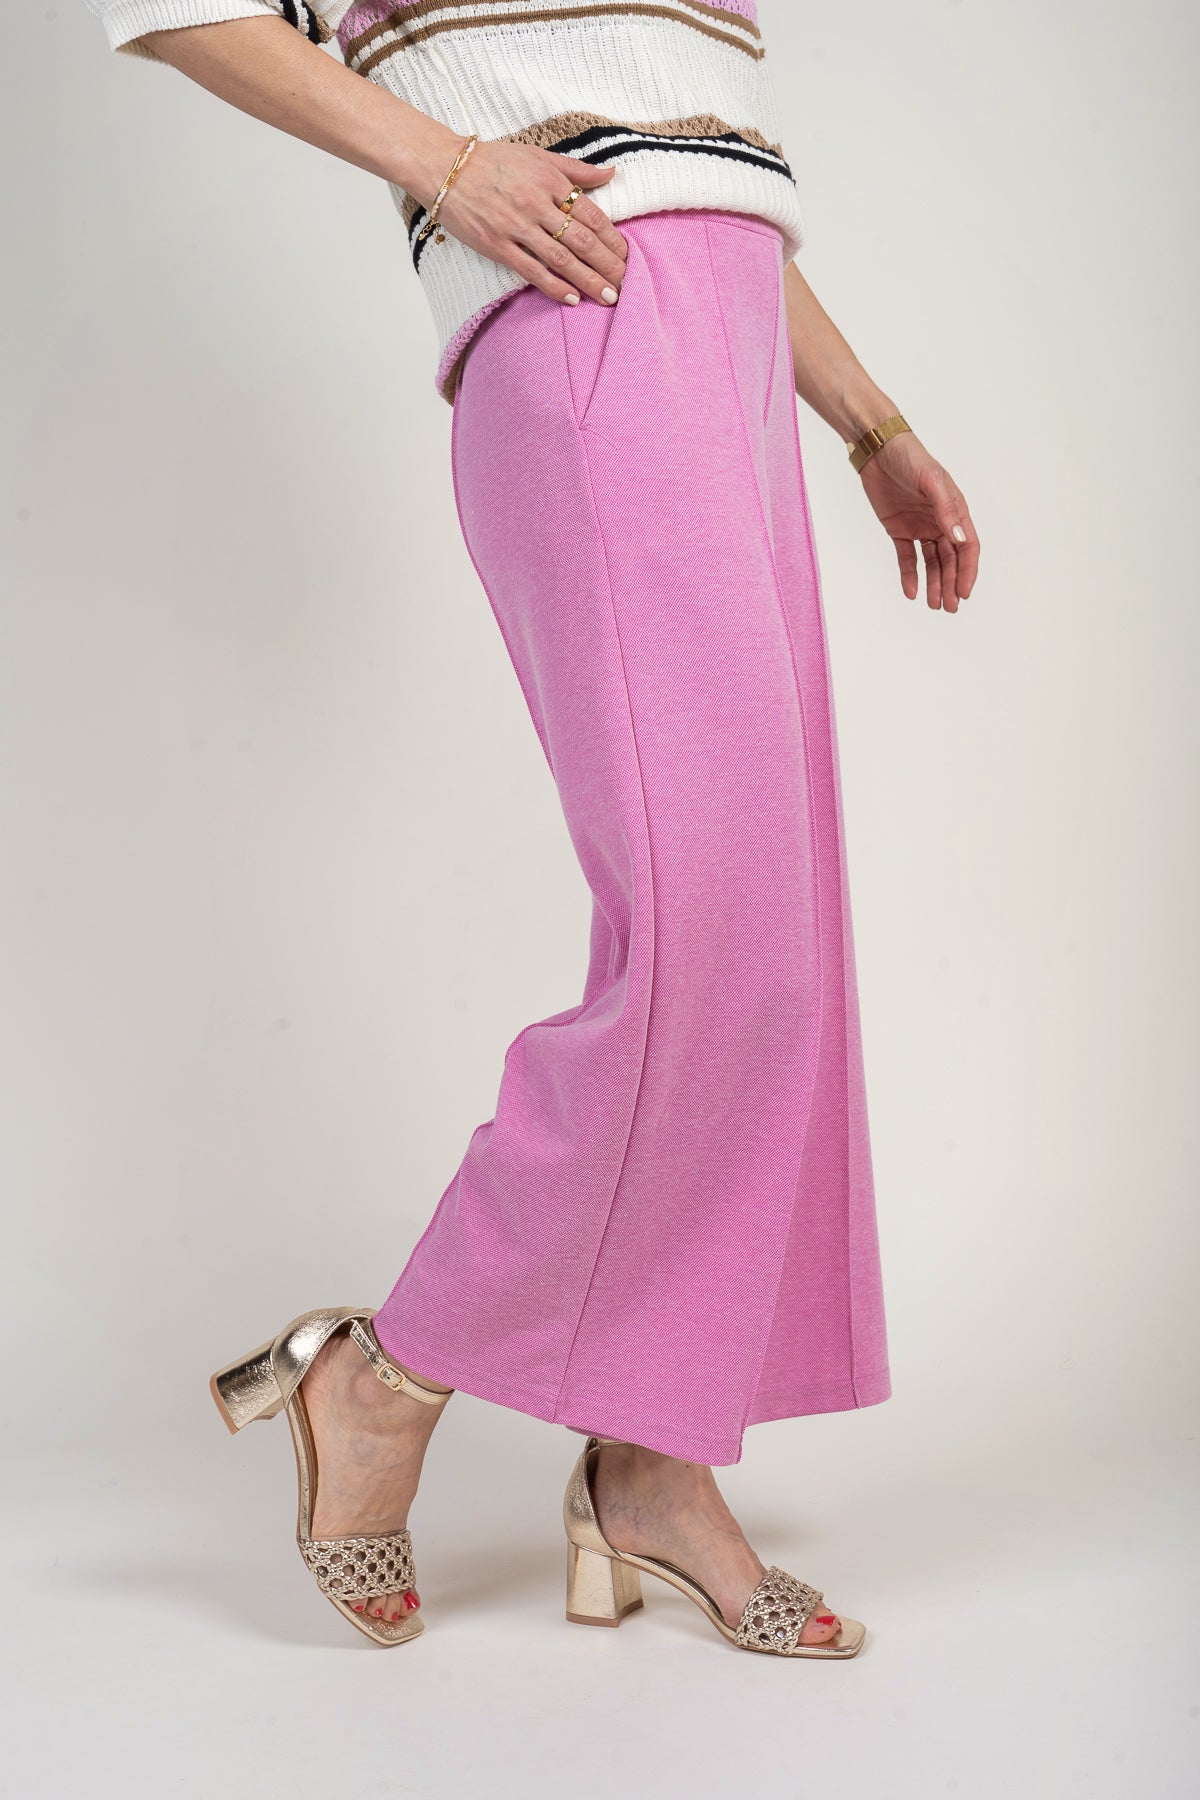 Kate Pique Pants Super Pink